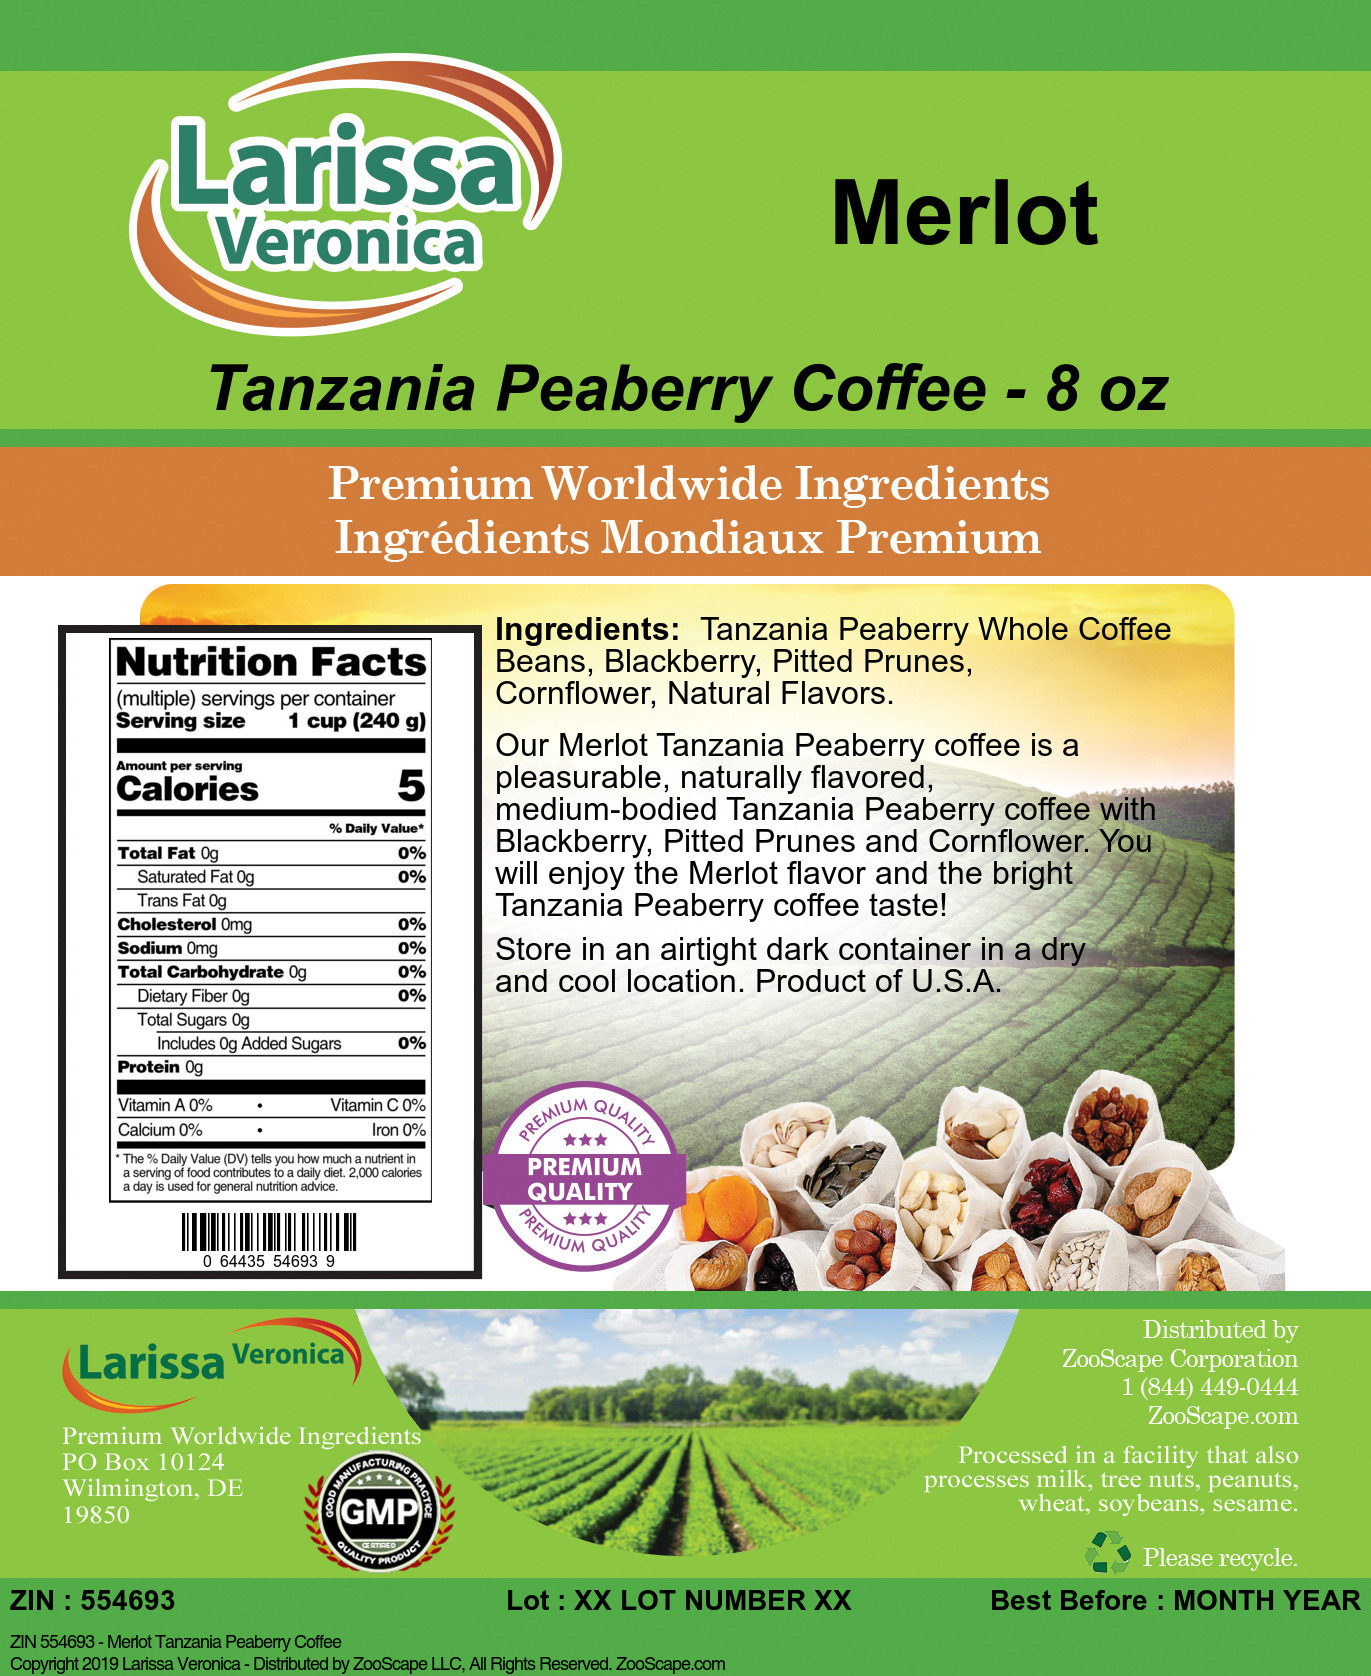 Merlot Tanzania Peaberry Coffee - Label